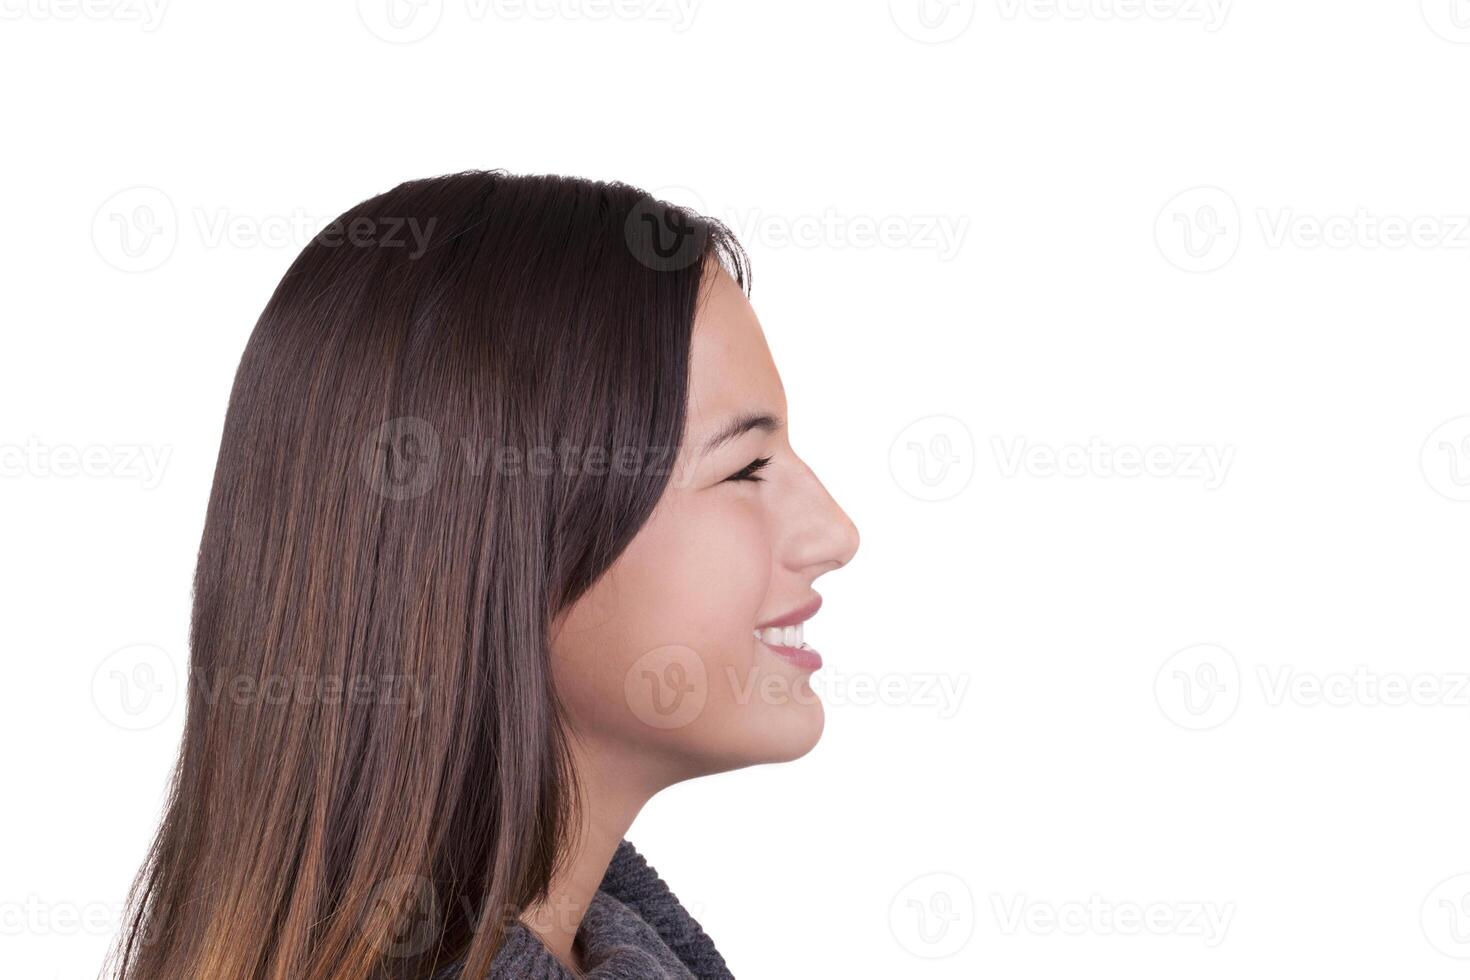 sonriente caucásico adolescente niña perfil retrato horizontal foto